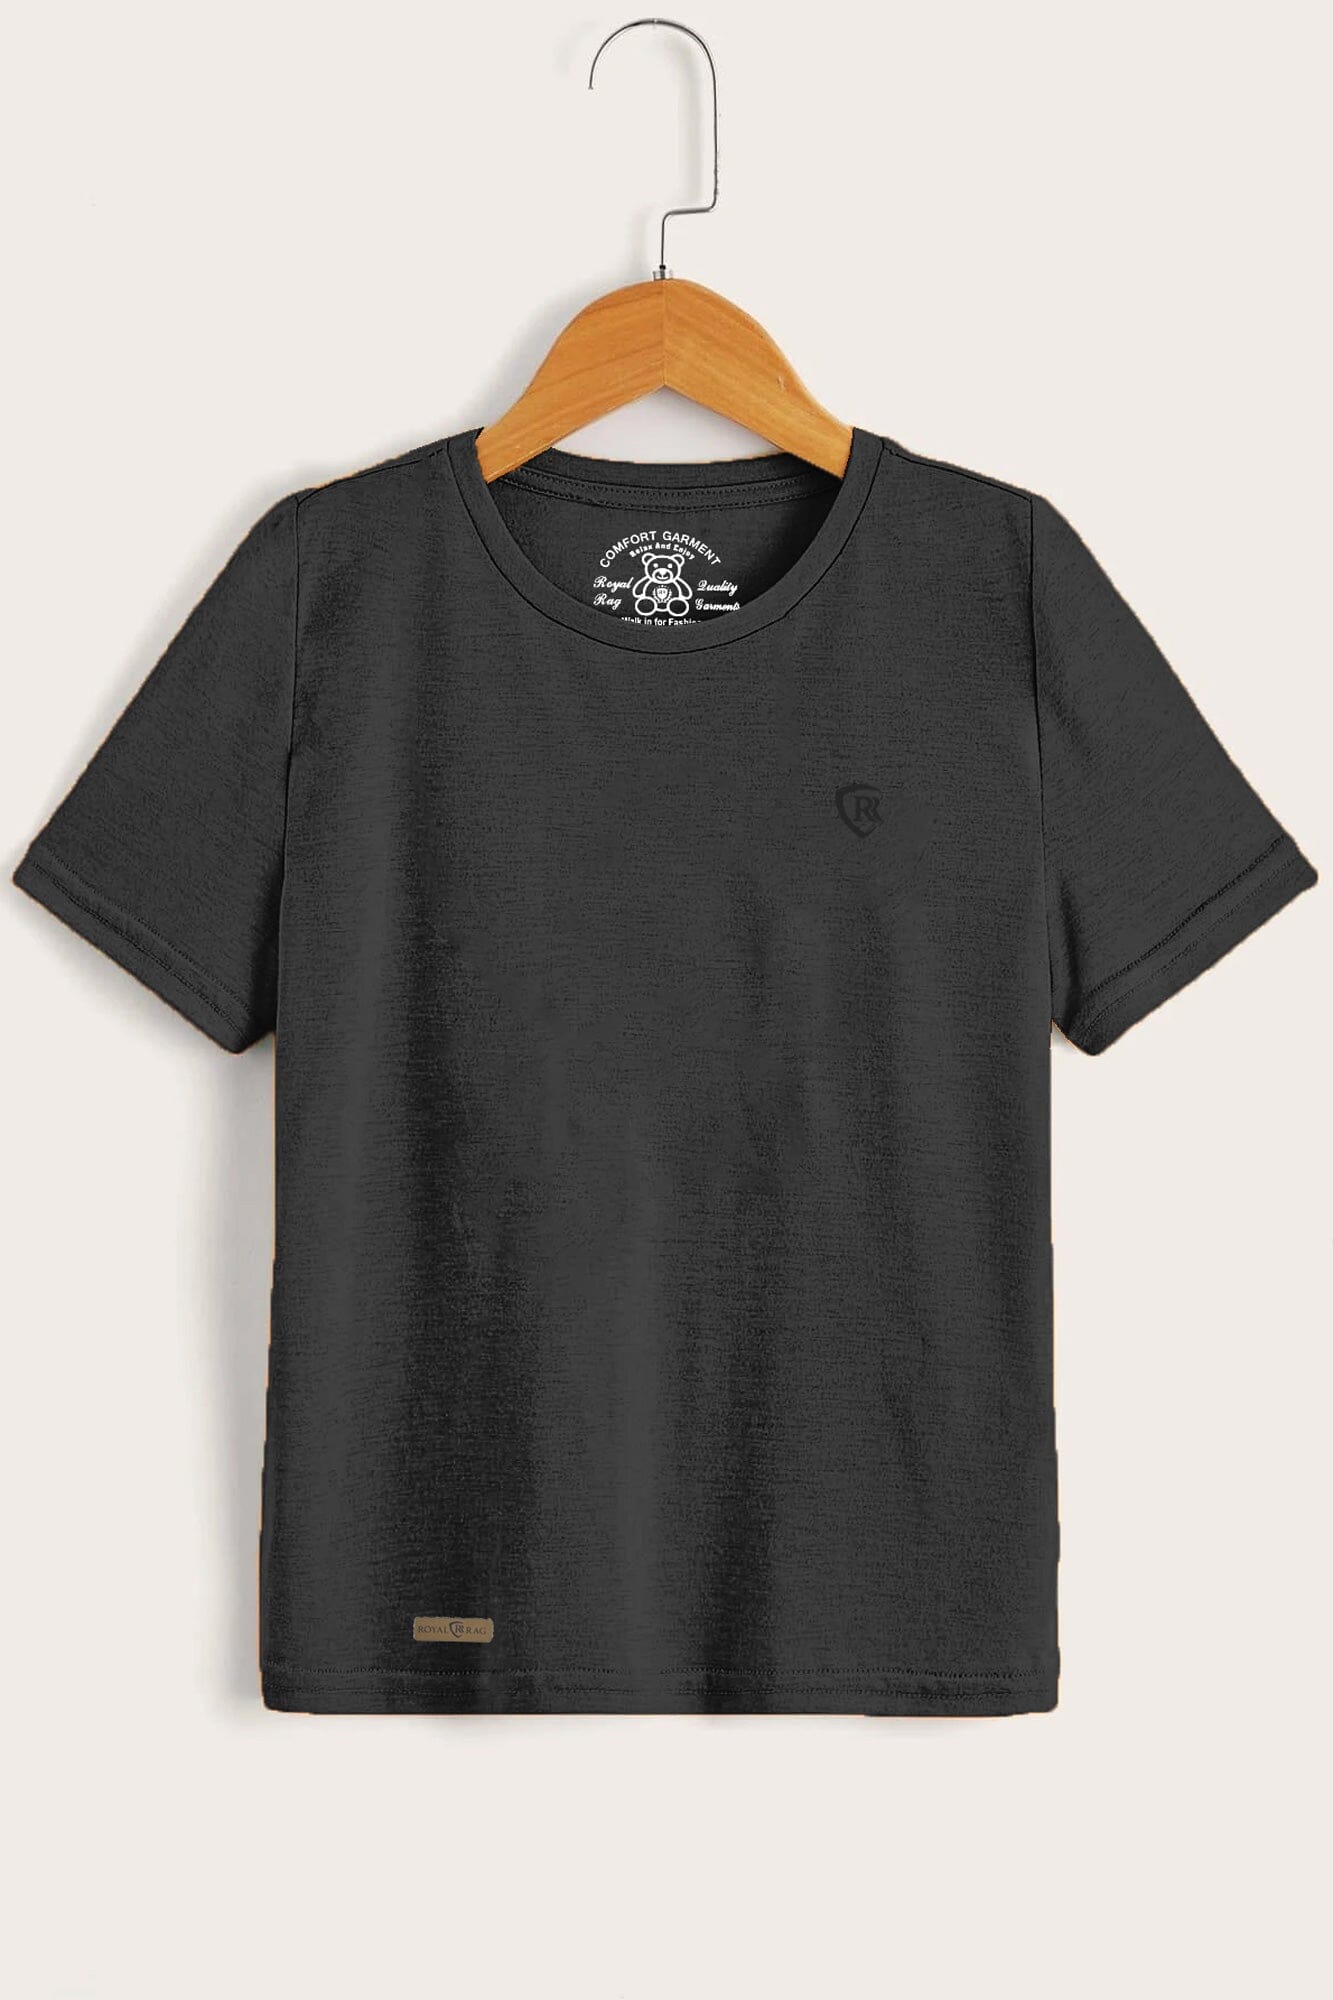 RR Kid's Logo Printed Short Sleeve Tee Shirt Boy's Tee Shirt Usman Traders Graphite 2-3 Years 